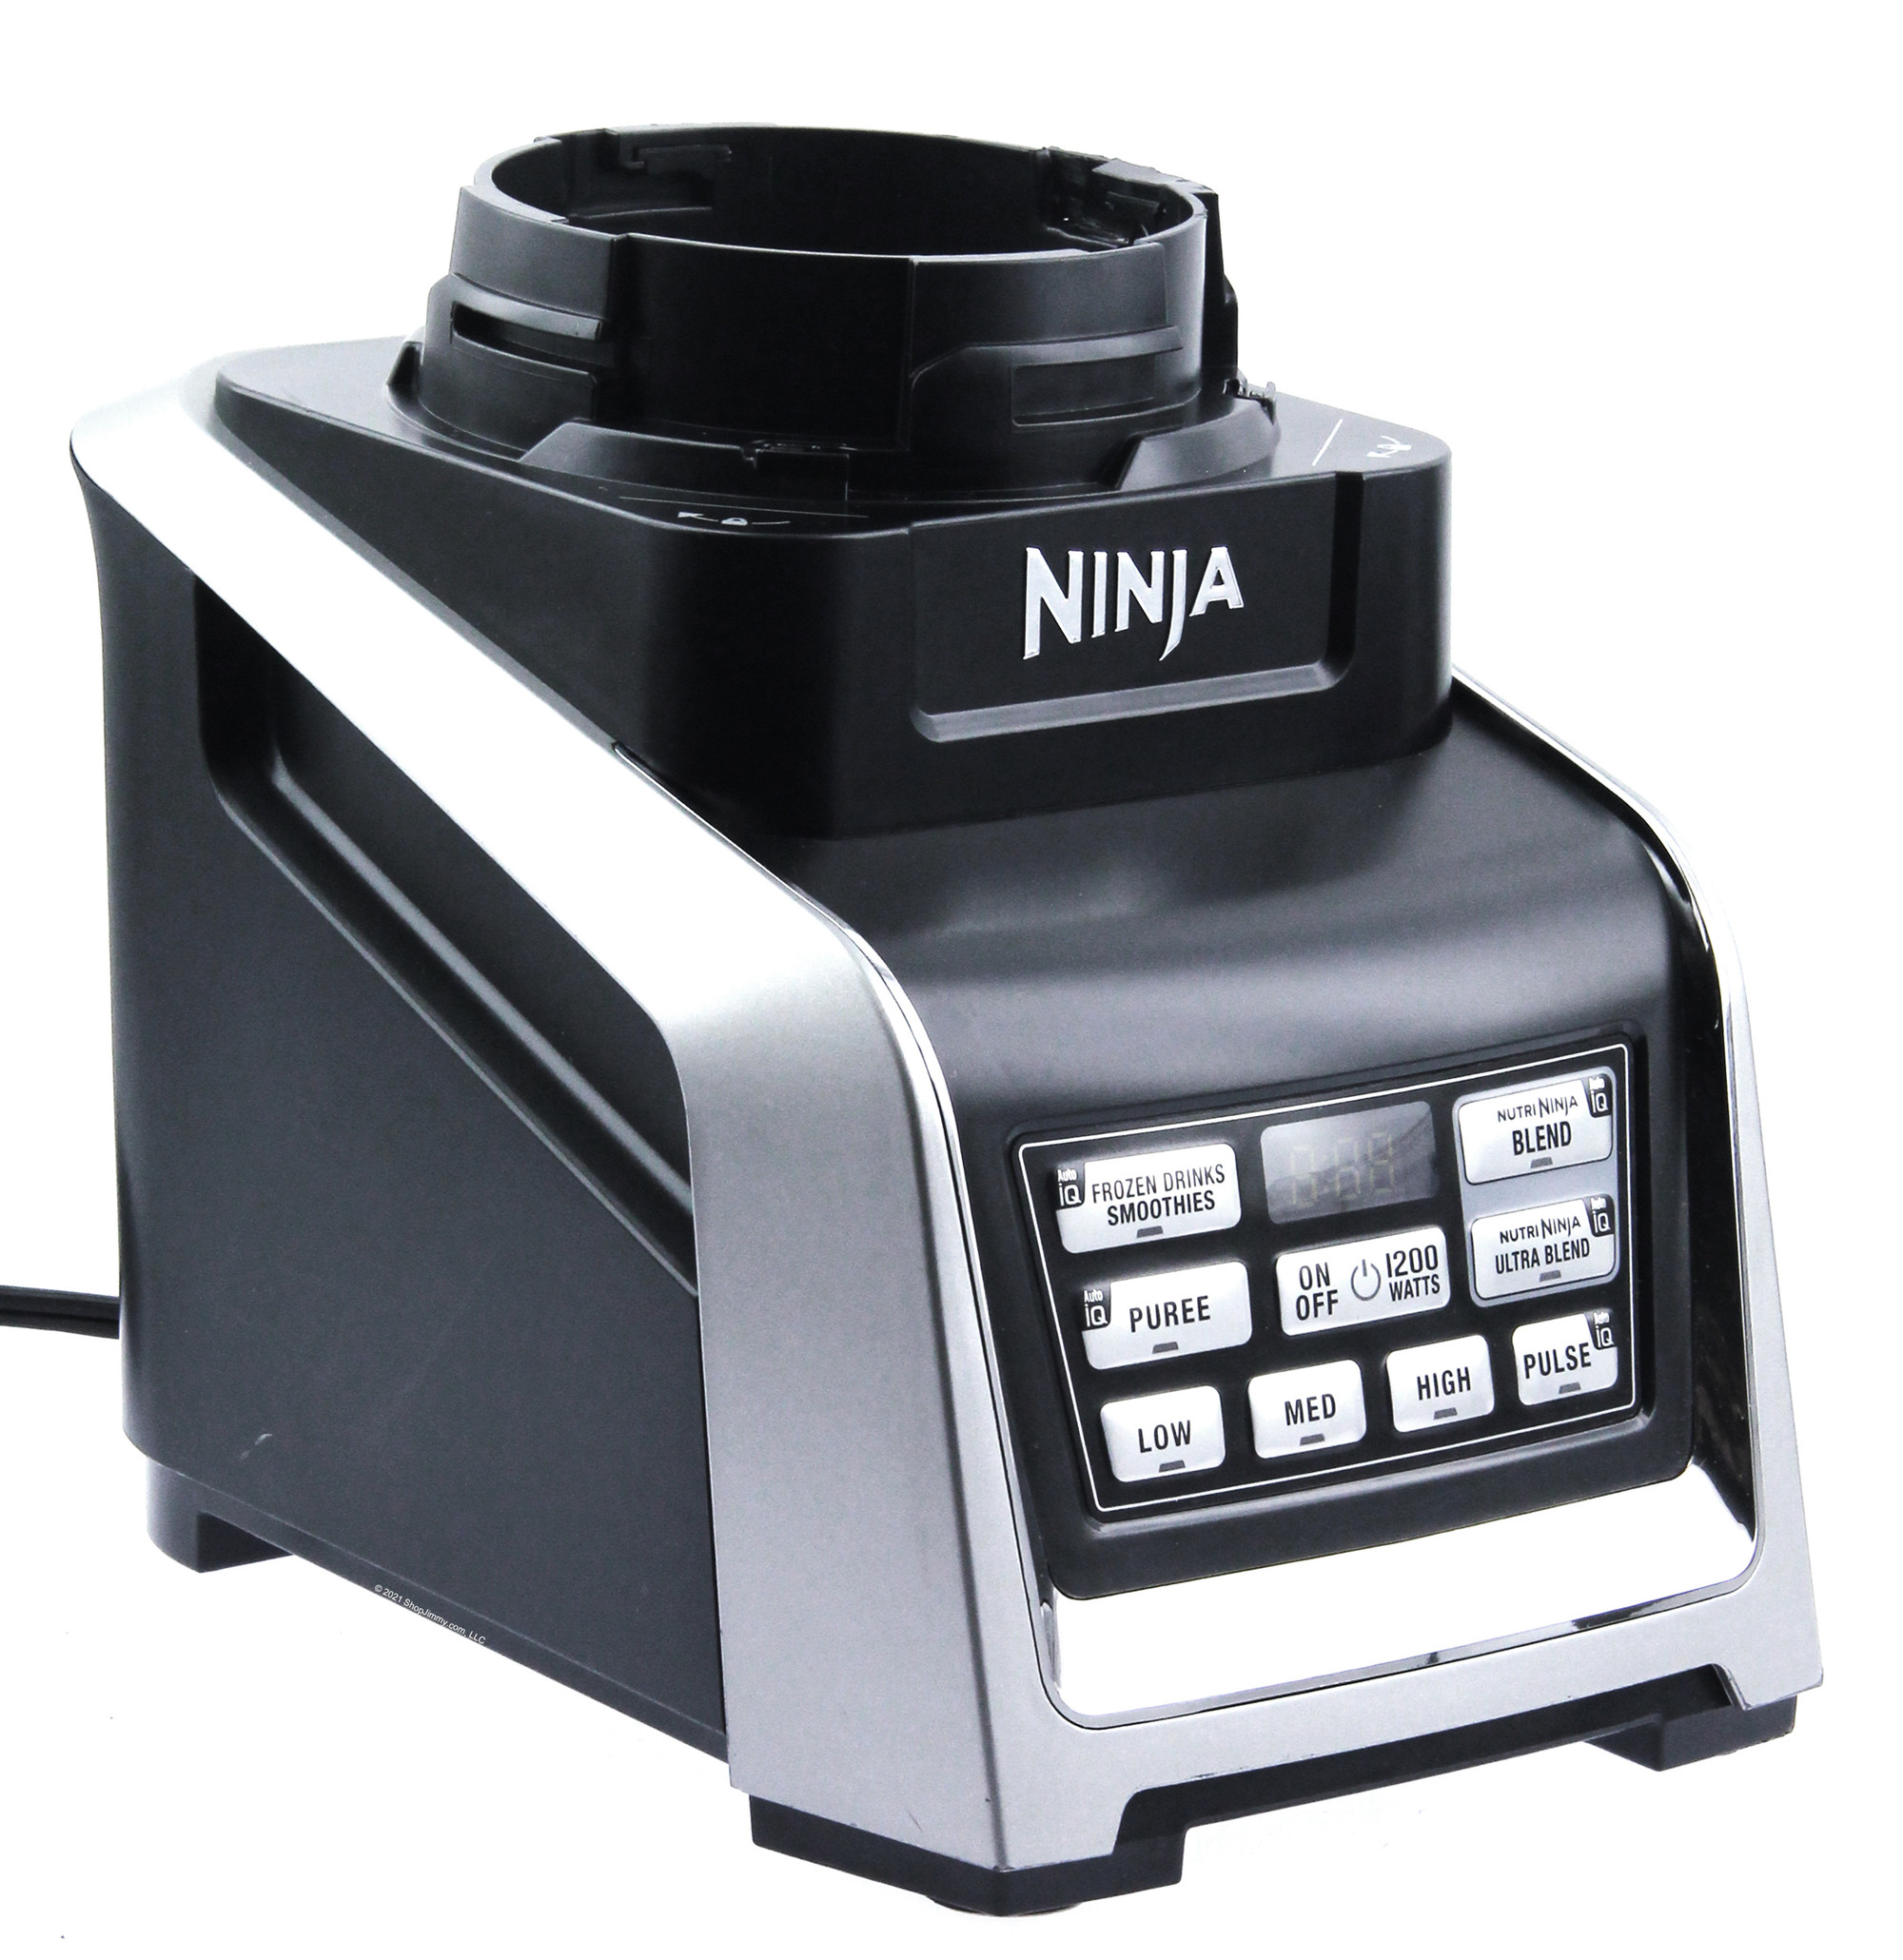 Ninja Duo Auto-iQ Blender with Single Serve Cups, BL640 